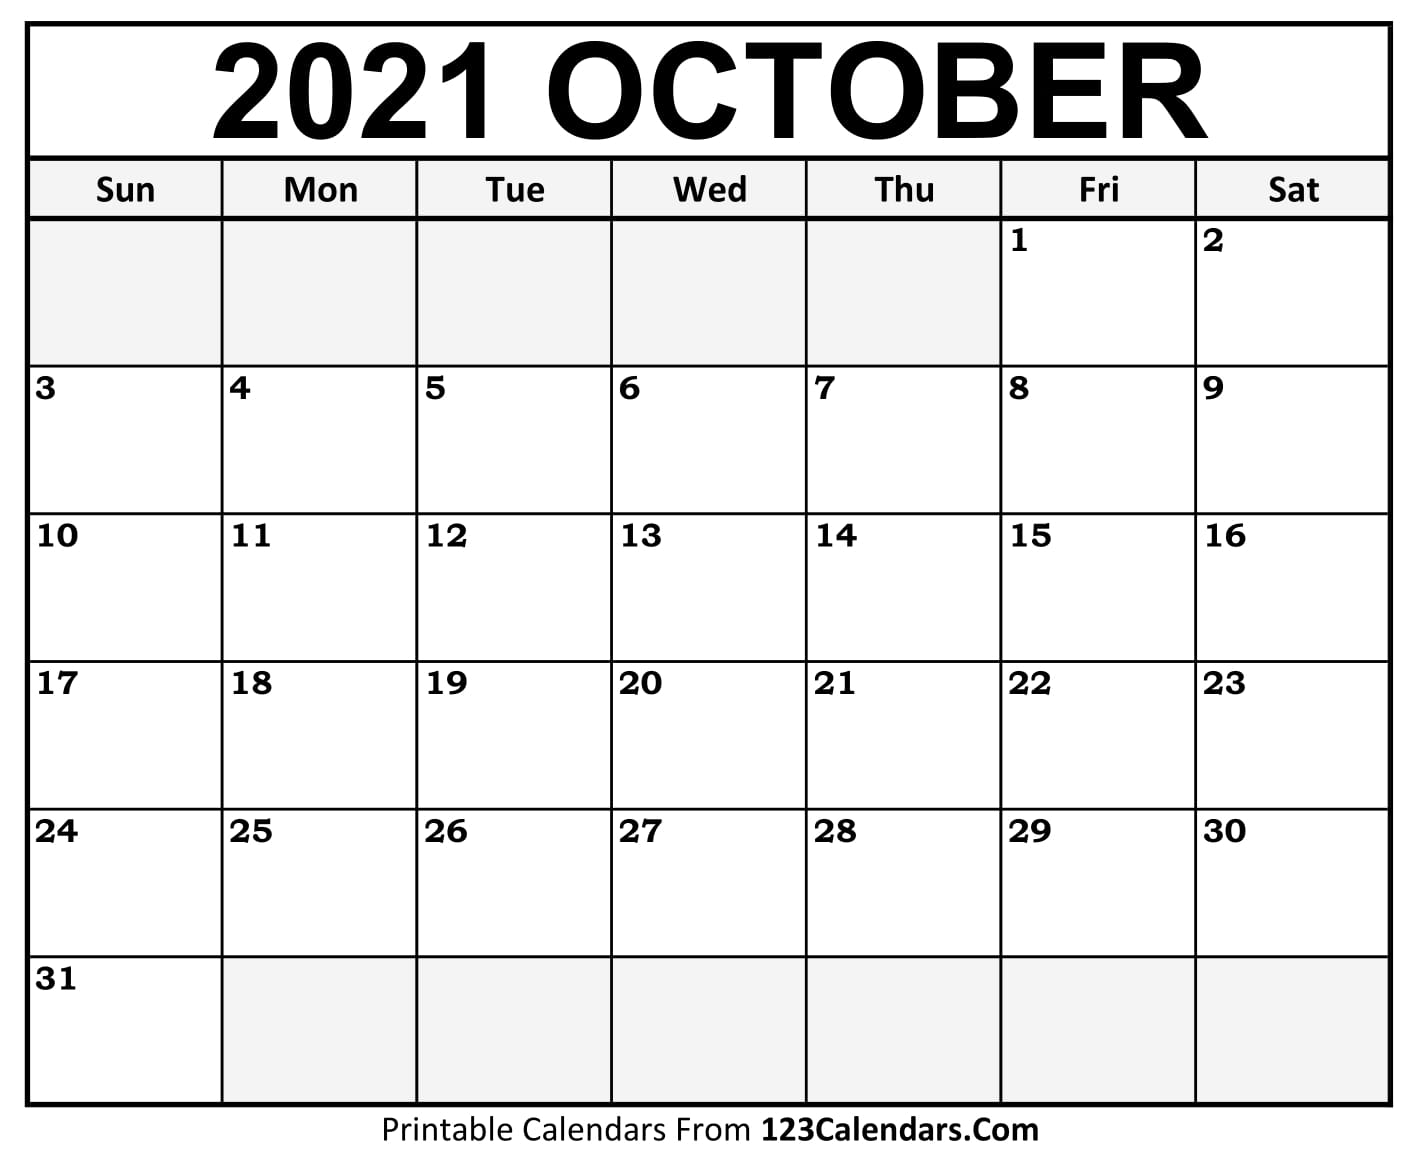 Printable Monthly Calendar 2021 October